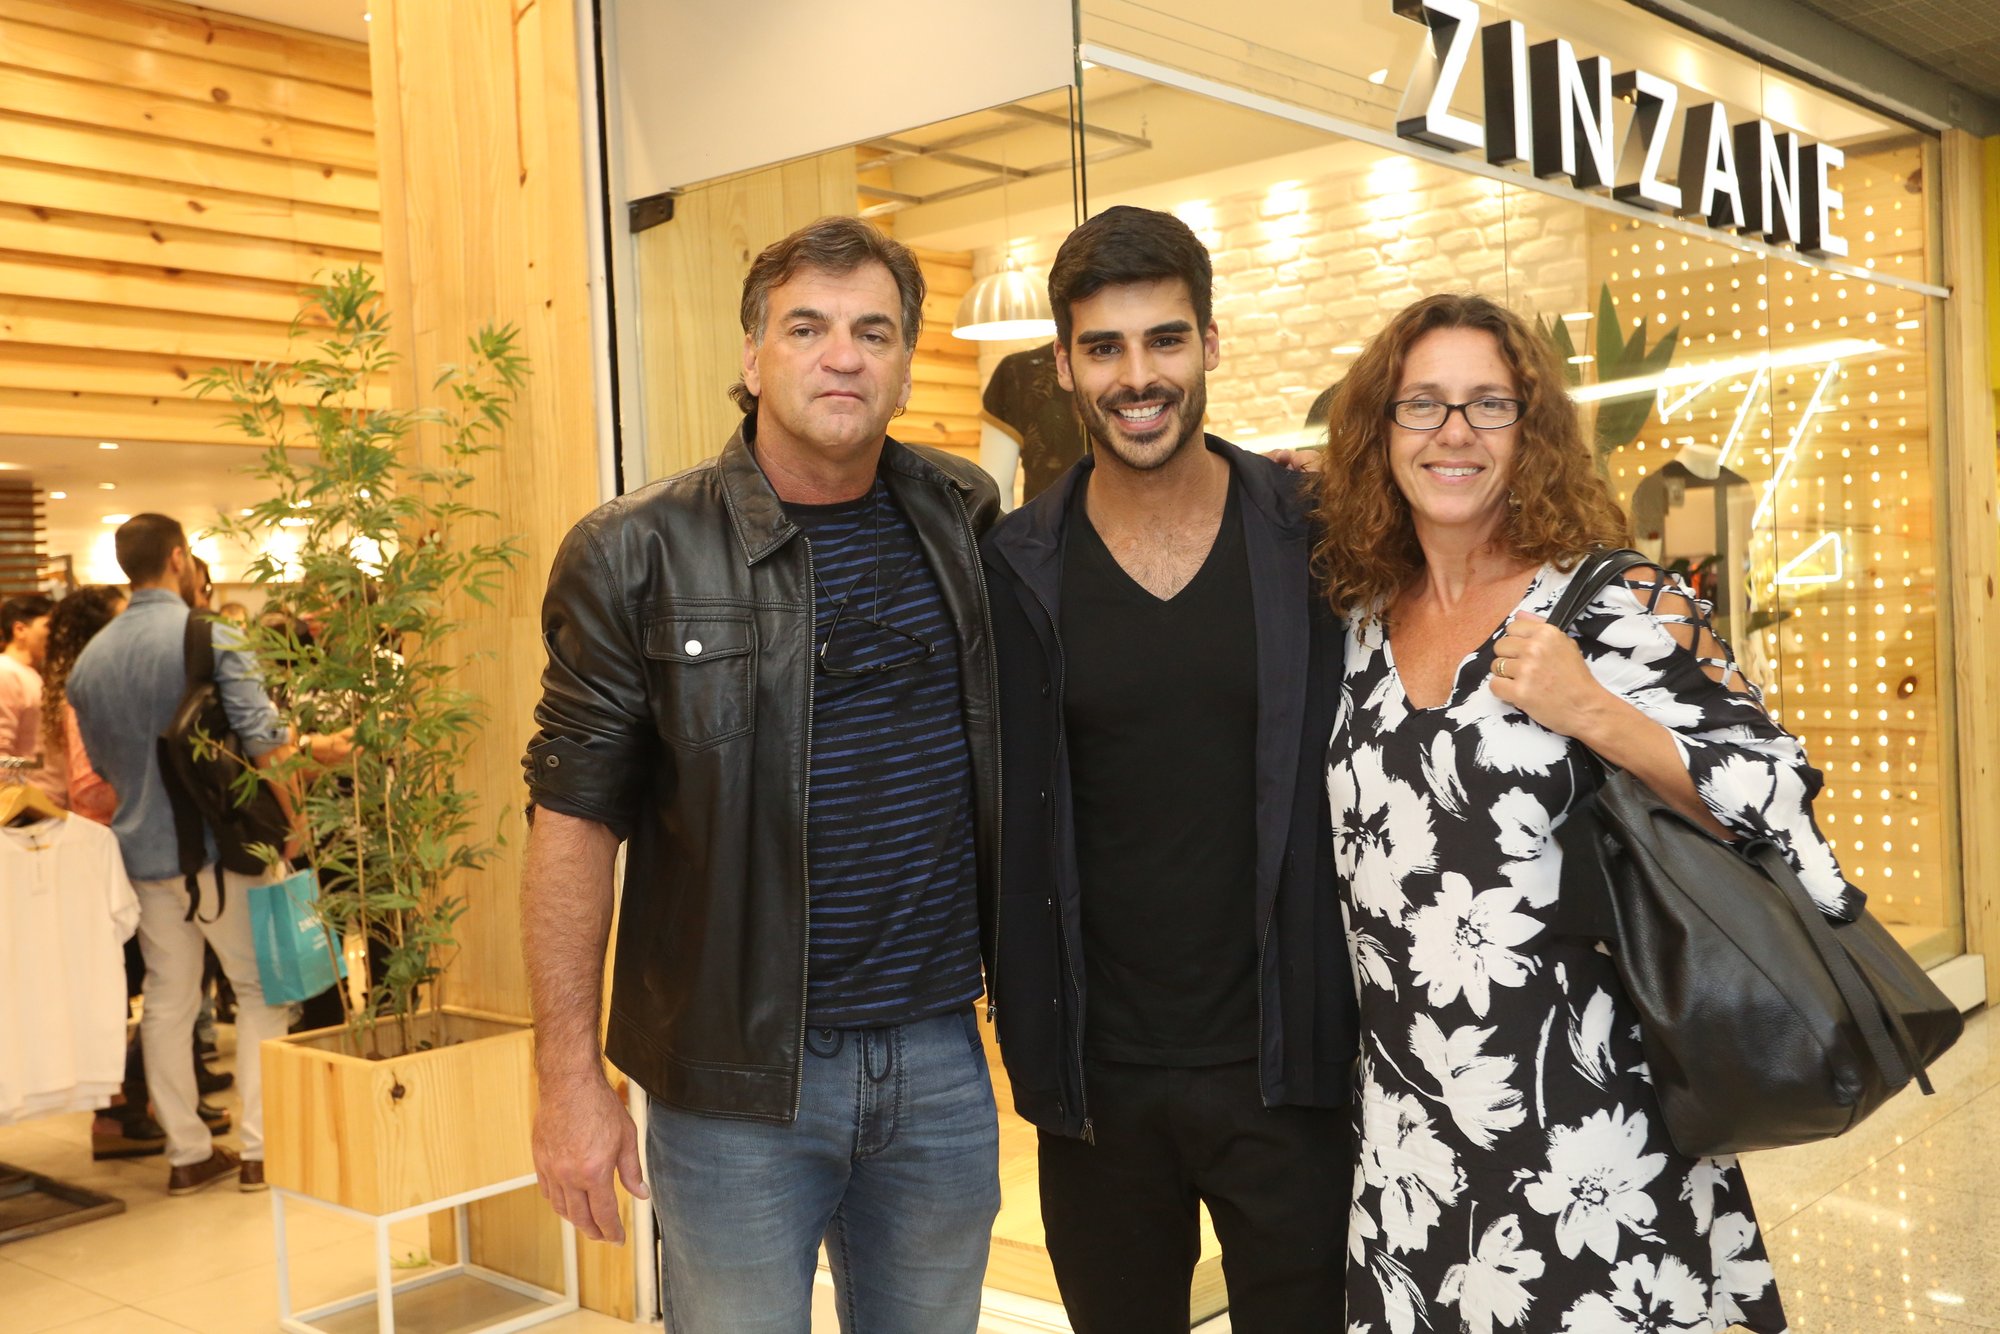 Anderson Tomazini ao lado de Ricardo Villarinho e Claudia Richa, donos da Zinzane